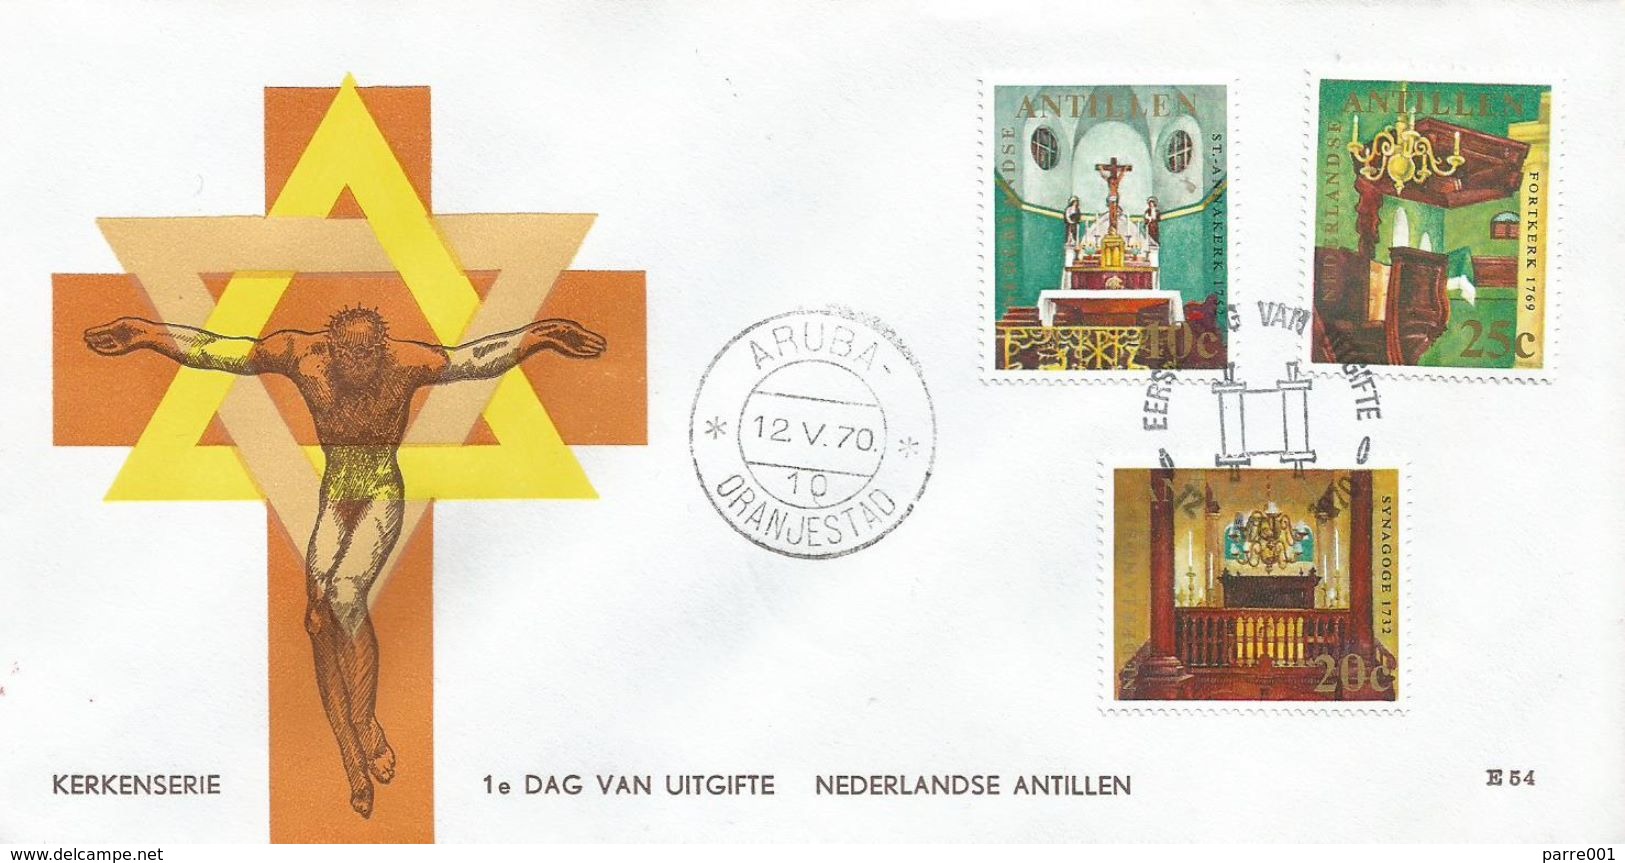 Netherlands Antilles 1970 Aruba Curaçao Interior Emanuel-Synagoge Punda Anna Church Obrabanda FDC Cover - Jewish